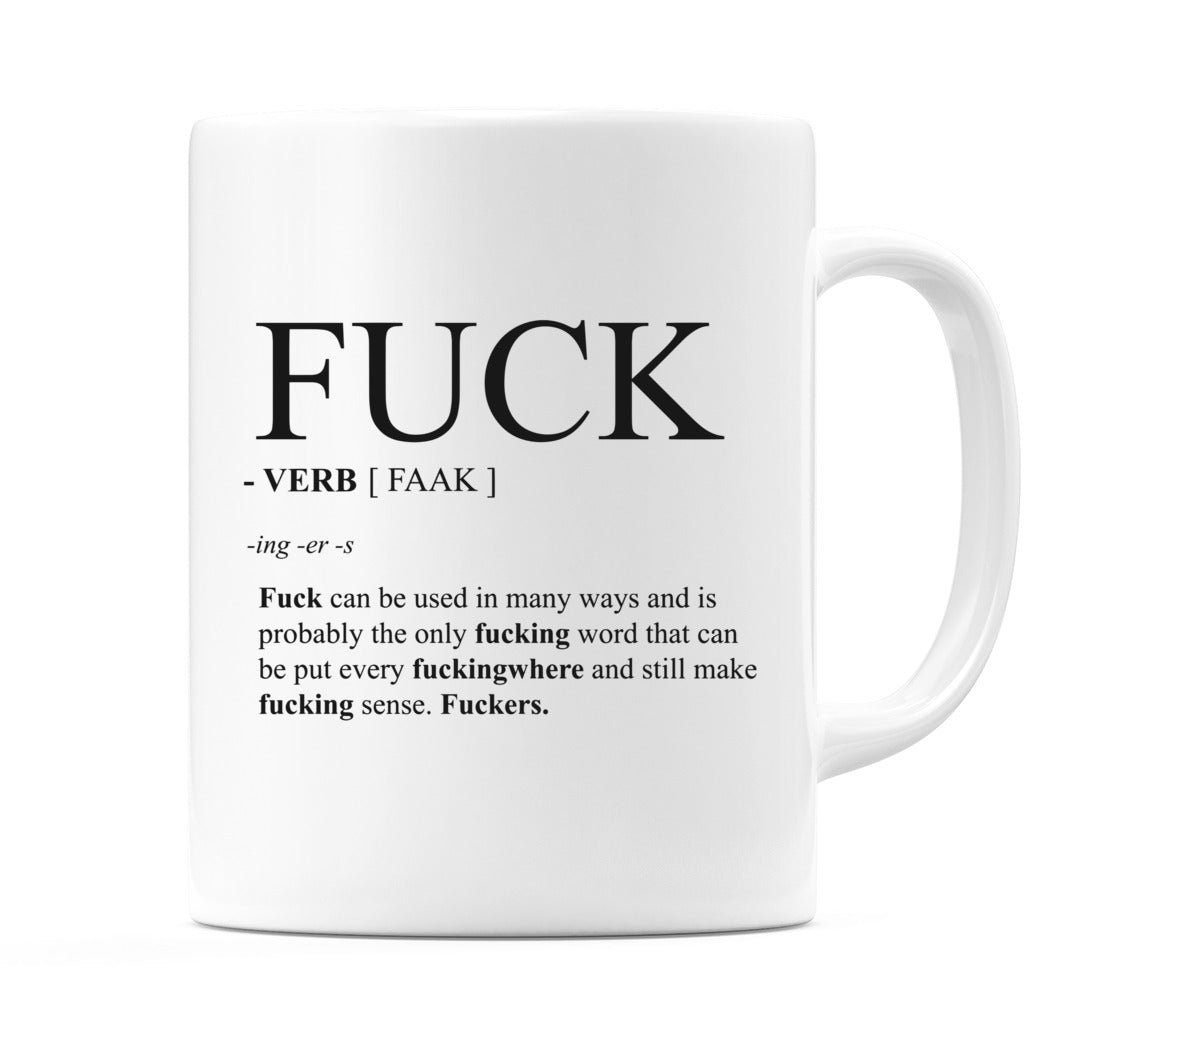 F*ck - VERB [FAAK] Mug